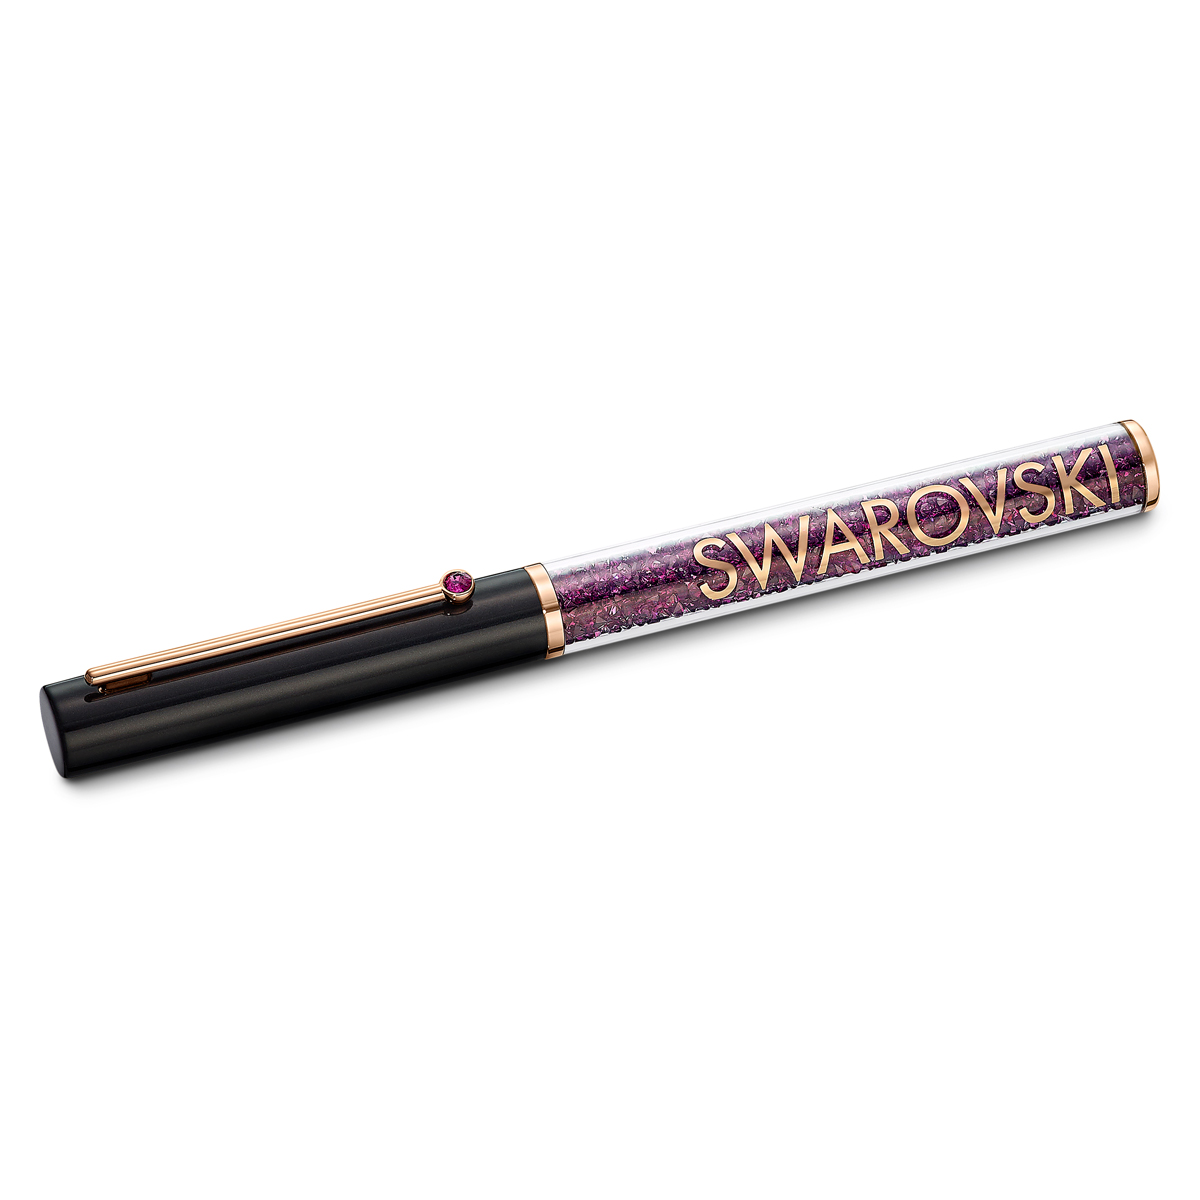 Swarovski Crystalline Gloss Ballpoint Pen, Black And Purple, Rose Gold Tone Plated